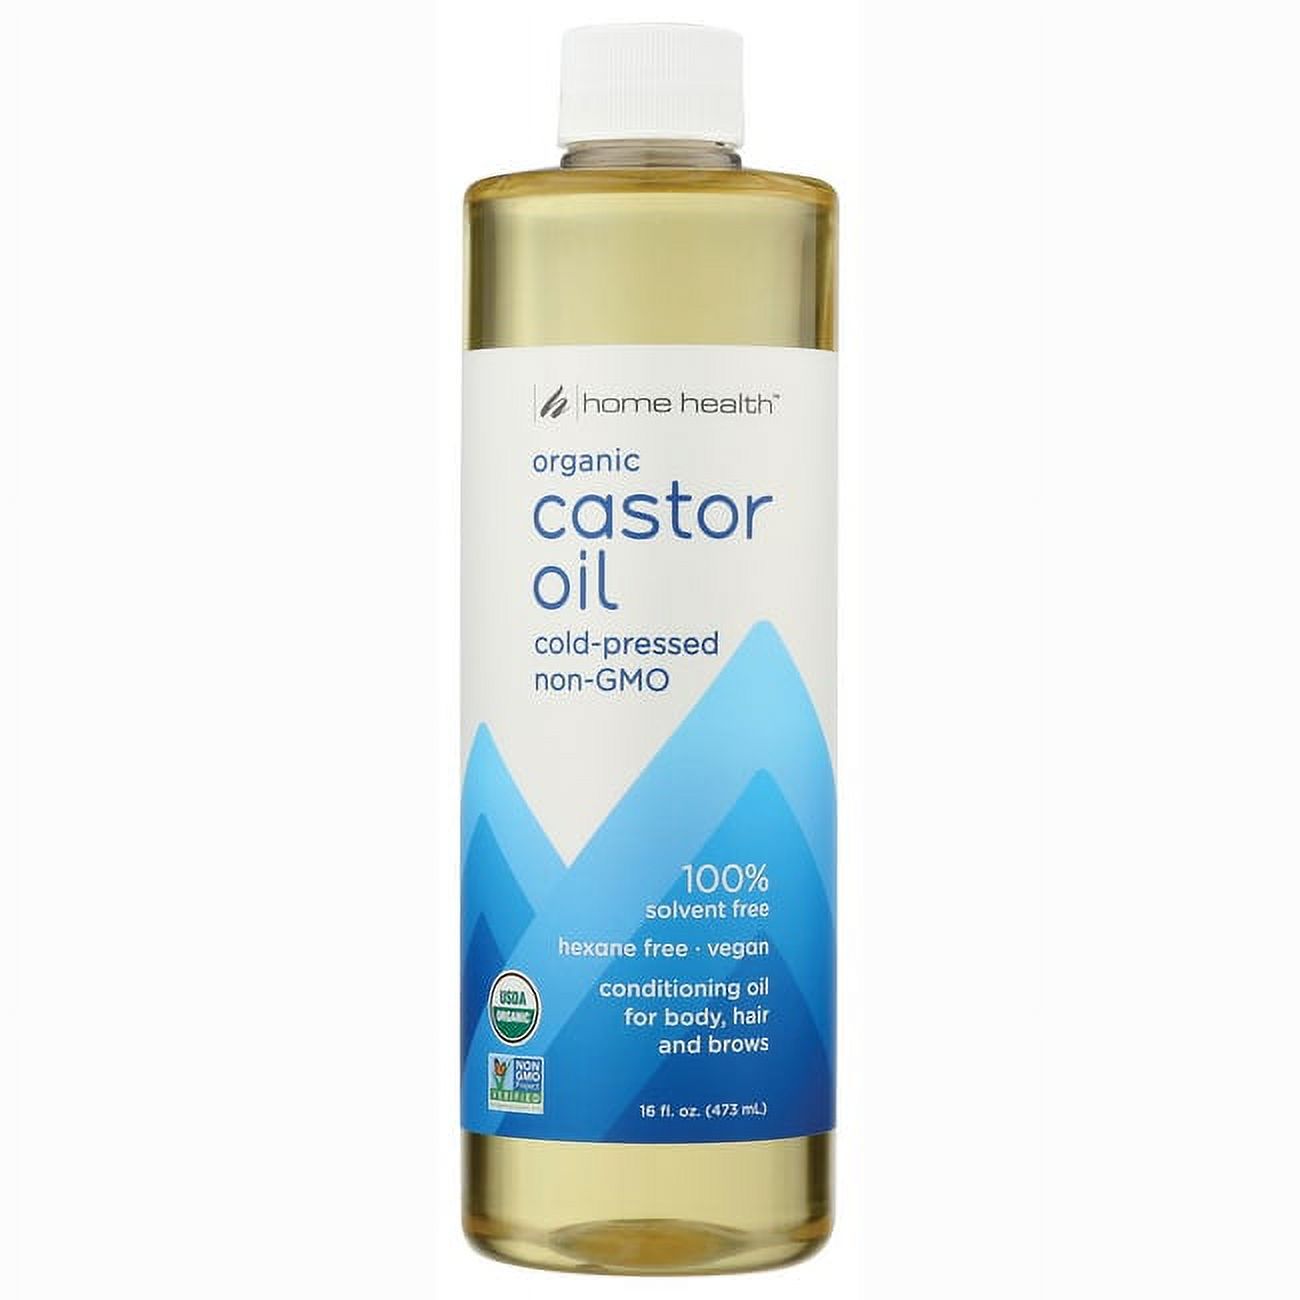 Home Health Organic Castor Oil 16 fl oz Liq - image 1 of 2